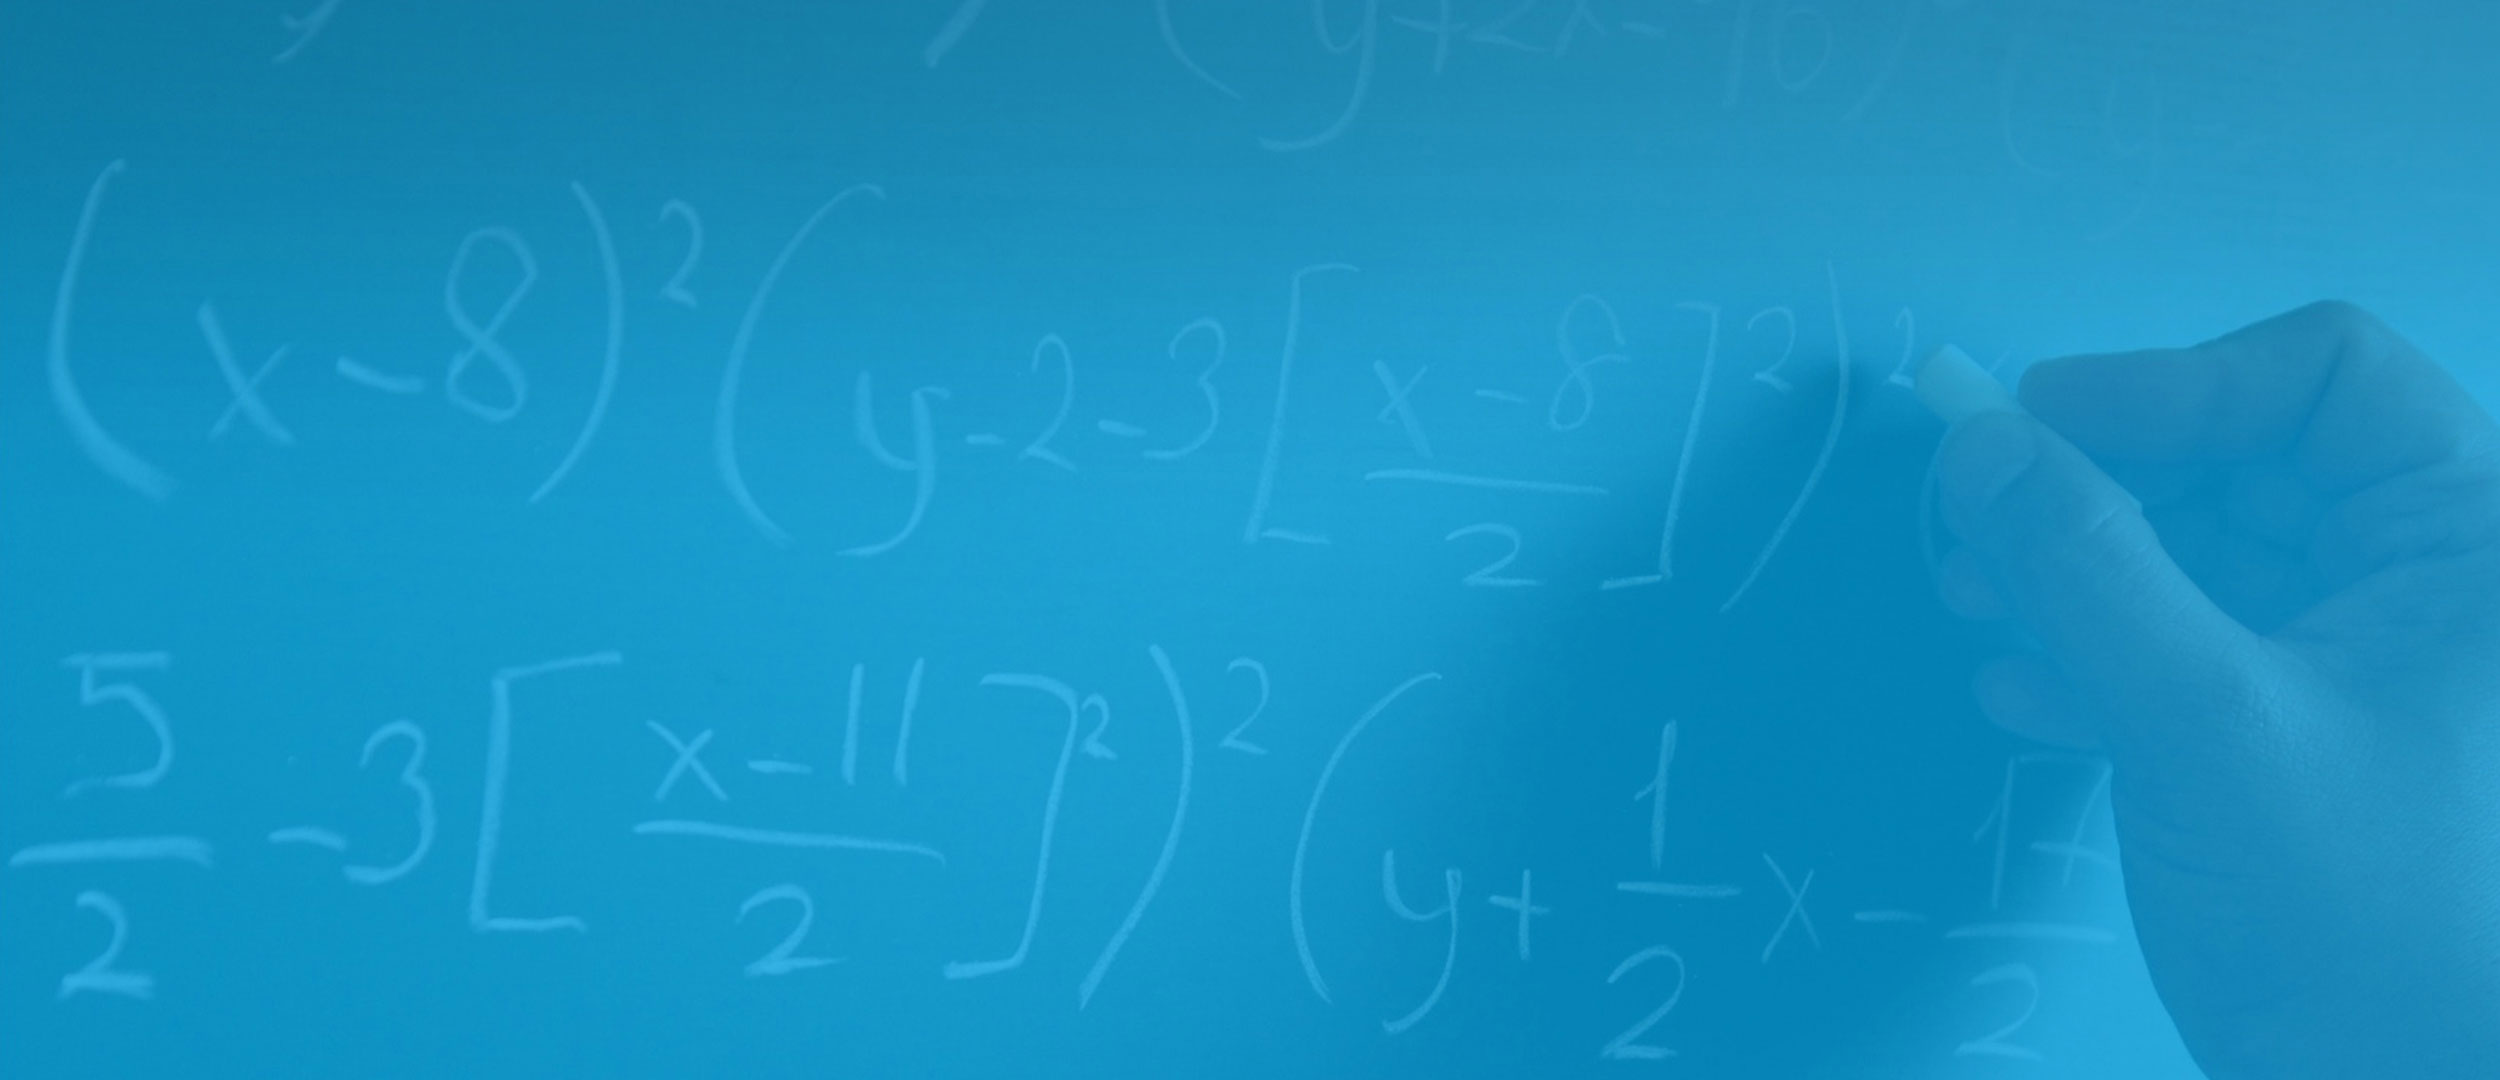 Math equations on a chalkboard